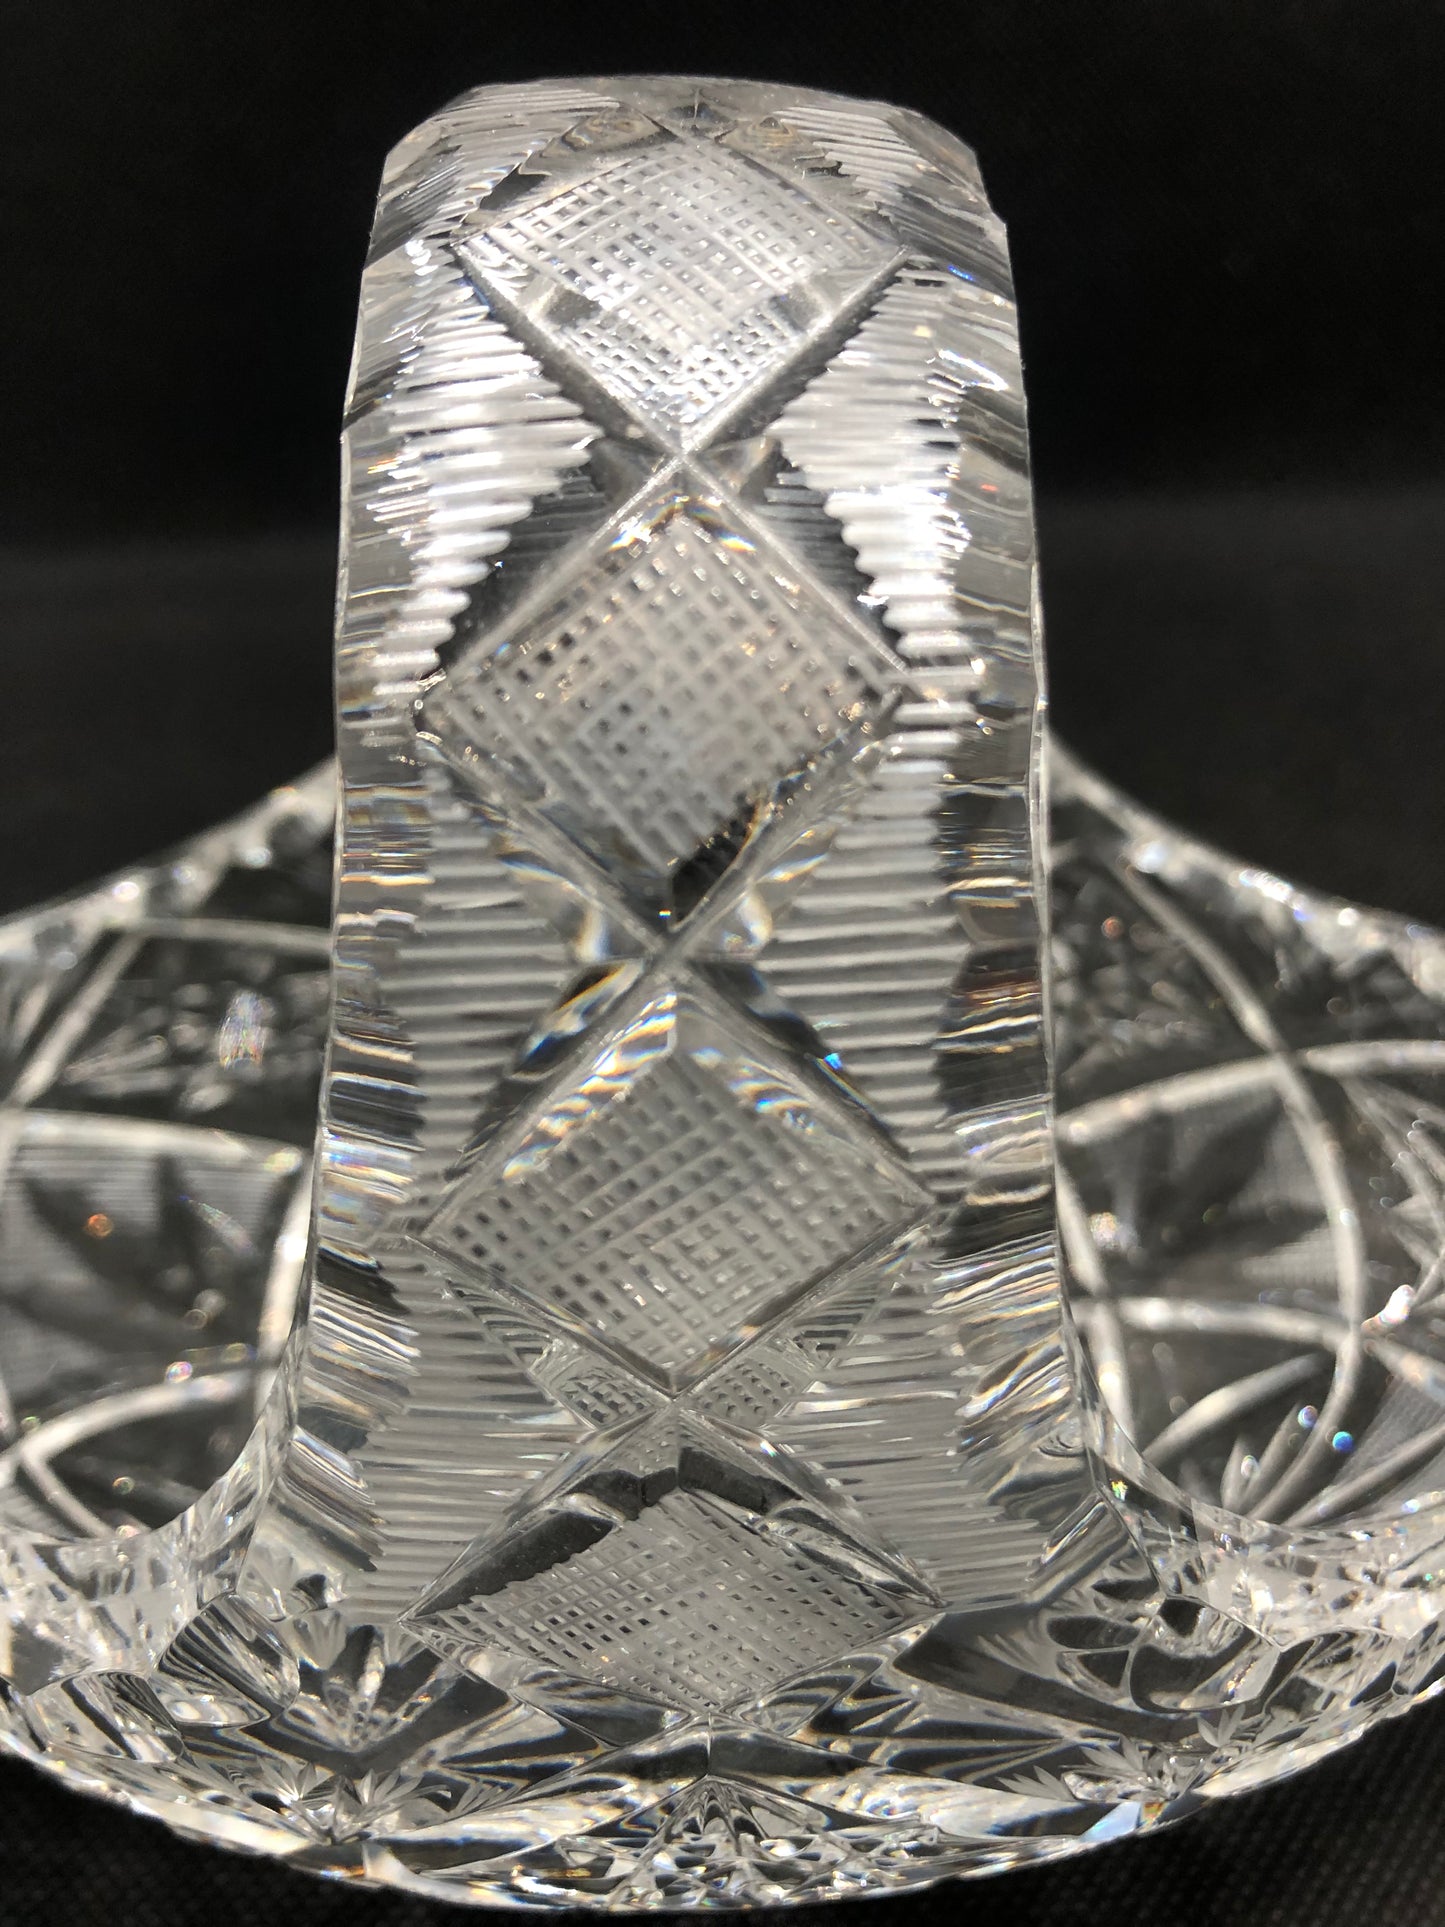 crystal vase handle close up